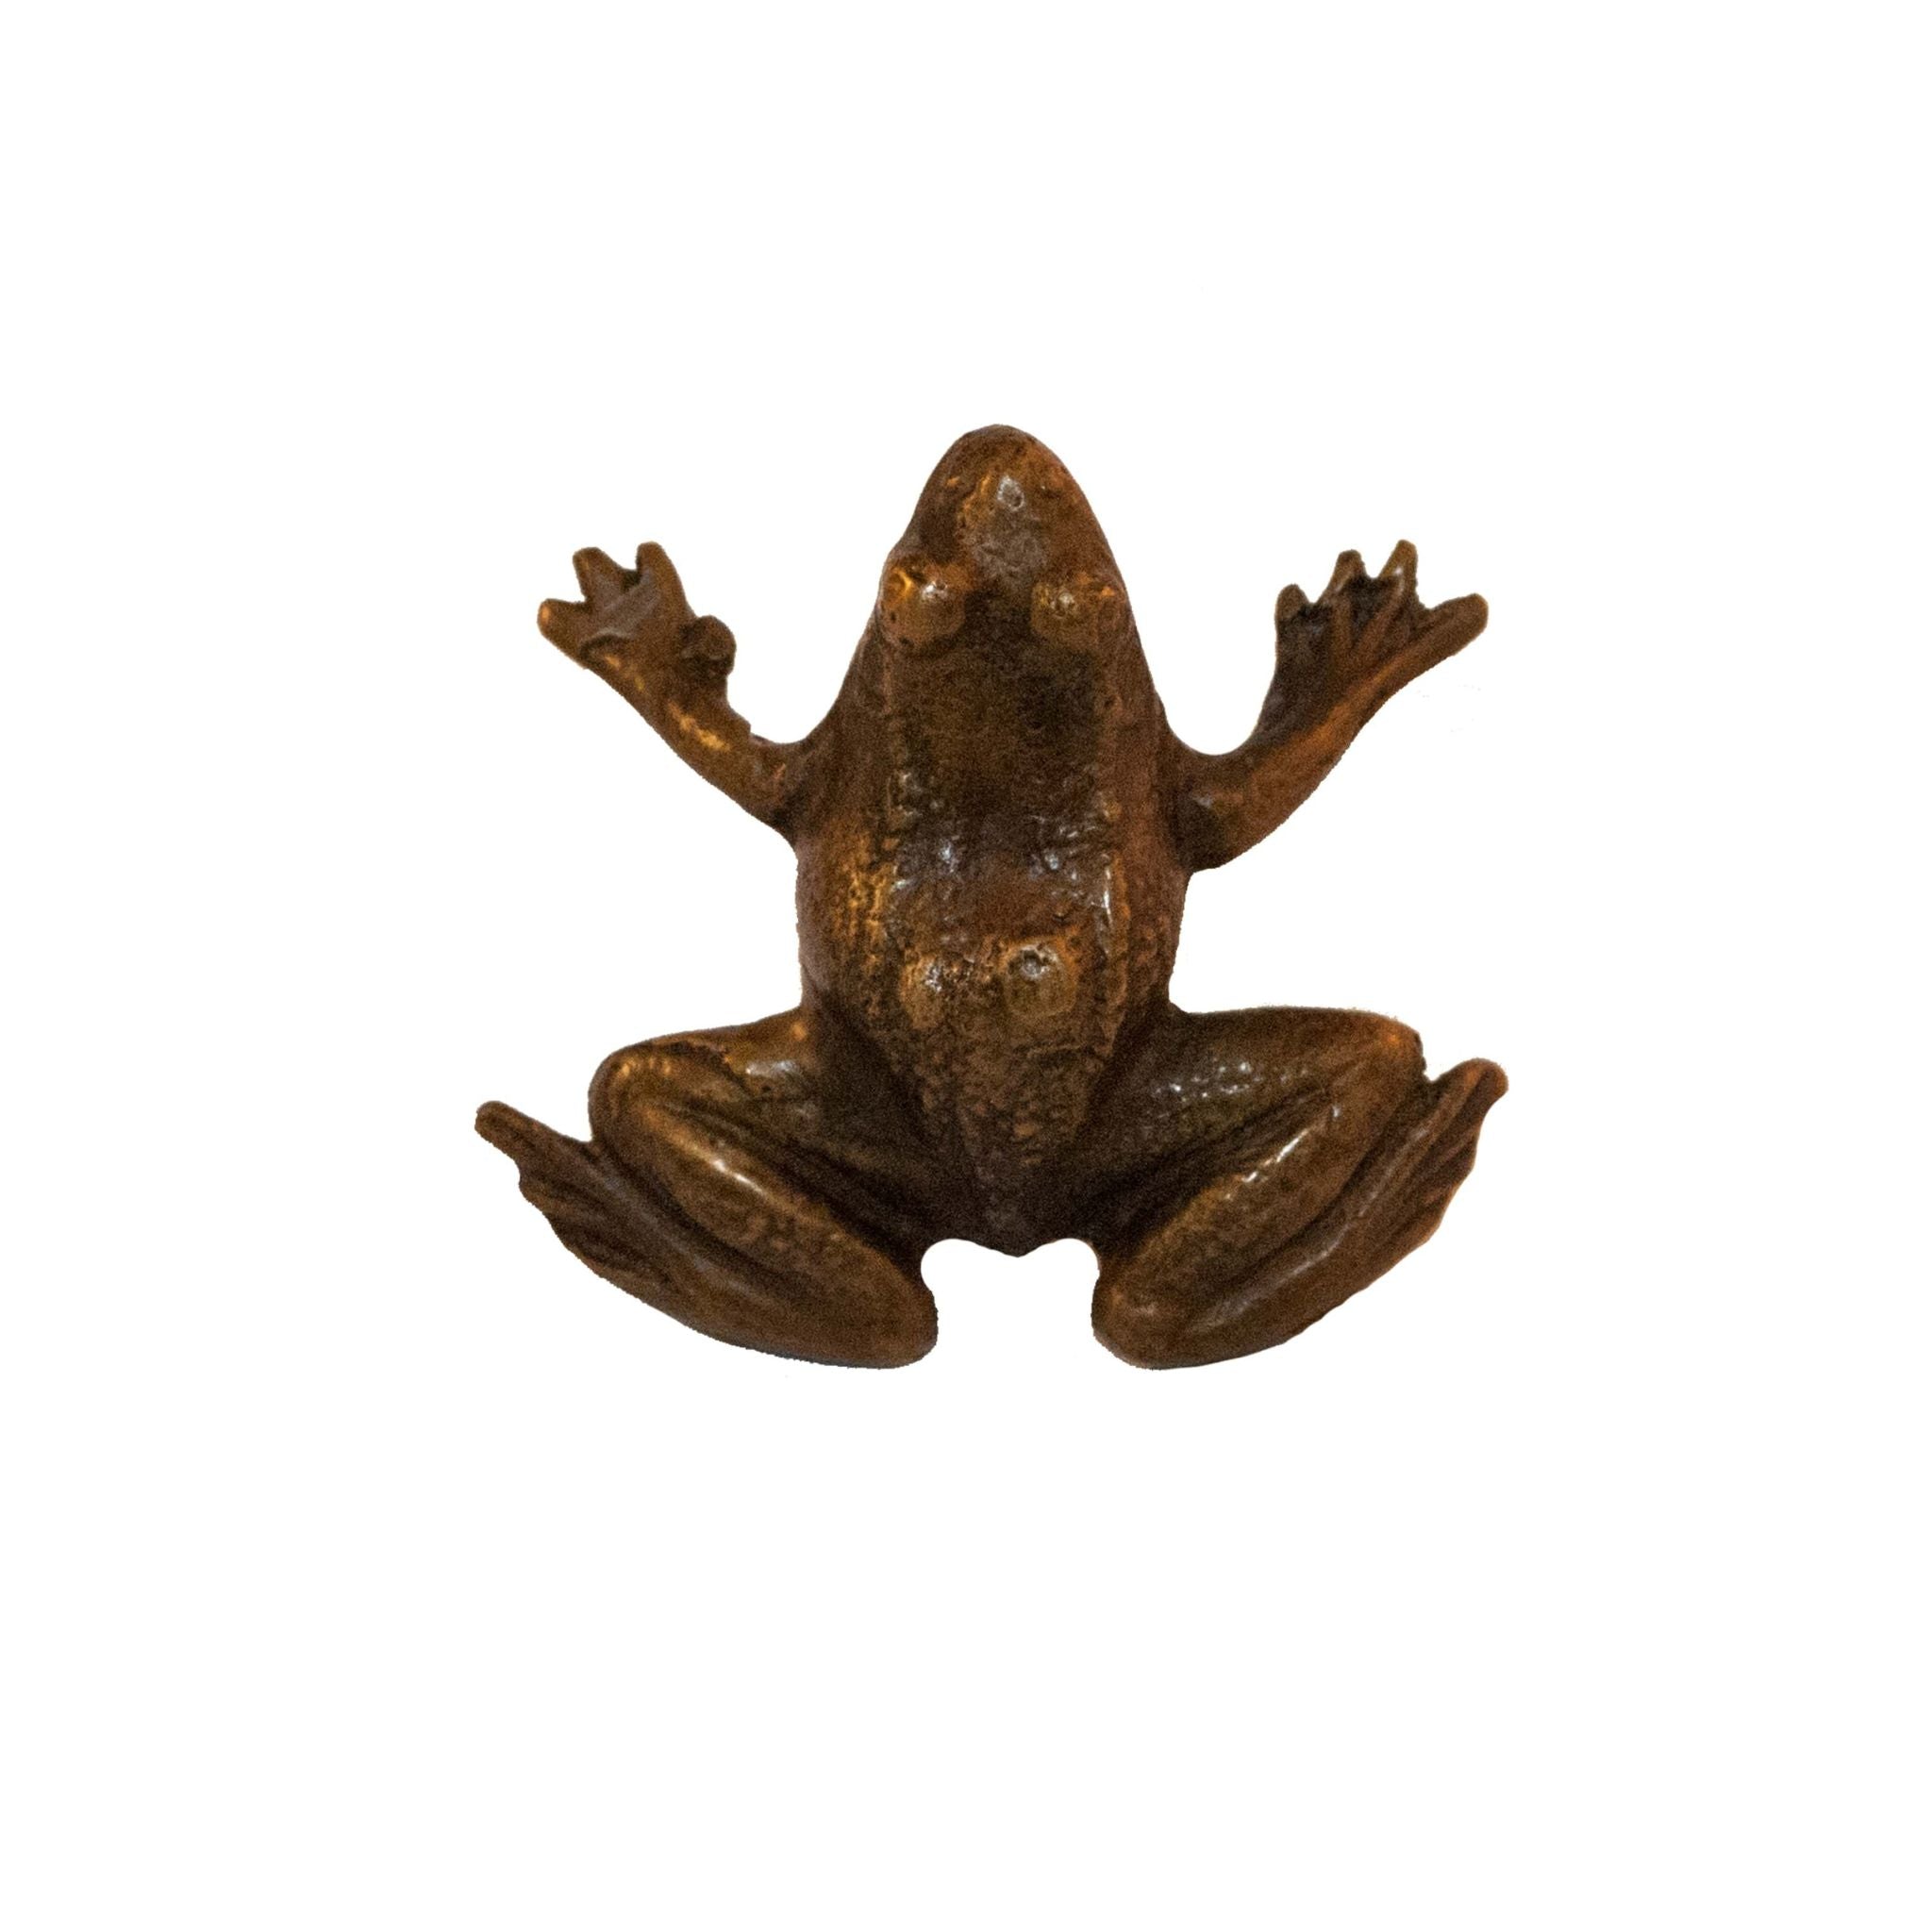 Fauna brass small toad knob - ilbronzetto